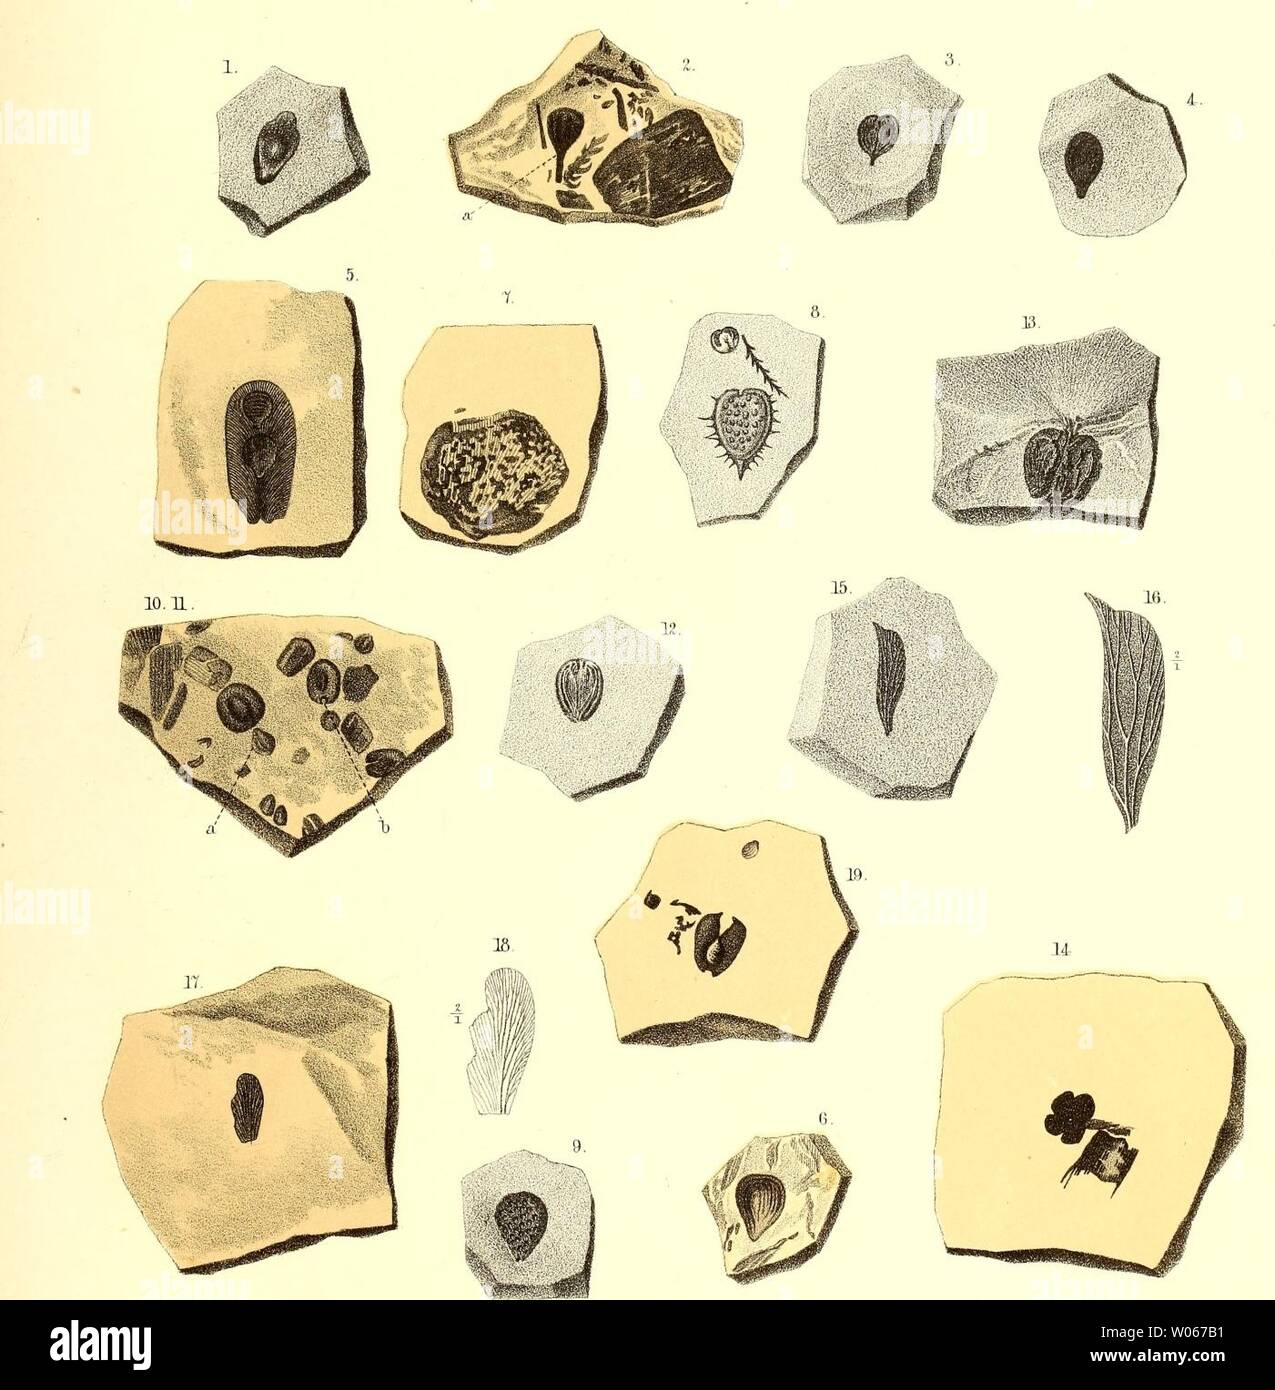 Archive image from page 392 of Die fossile Flora der Permischen. Die fossile Flora der Permischen Formation  diefossileflorad00gppe Year: 1864  Palaeontogr. Bd. XII. Taf. XXVIII.    1. Cardiocarpus umbonatus Göpp. — 2. C. attcnuatus Göpp. — 3. C. pedicellatus Göpp. — 4. C. apiculatus Göpp. Berg. — 5. Ii. C. subtriangulus Göpp. — 7. Cyclocarpus vanniformis Göpp. — 8. 9. Acantliocarpus xanthioides Göpp, 10. 11. Samaropsis ulmiformis Göpp. — 12. 13. Didymotheca cordata Göpp. — 15 — 19. Flügel von Insekten, ähnlich Rhynchotis. Stock Photo